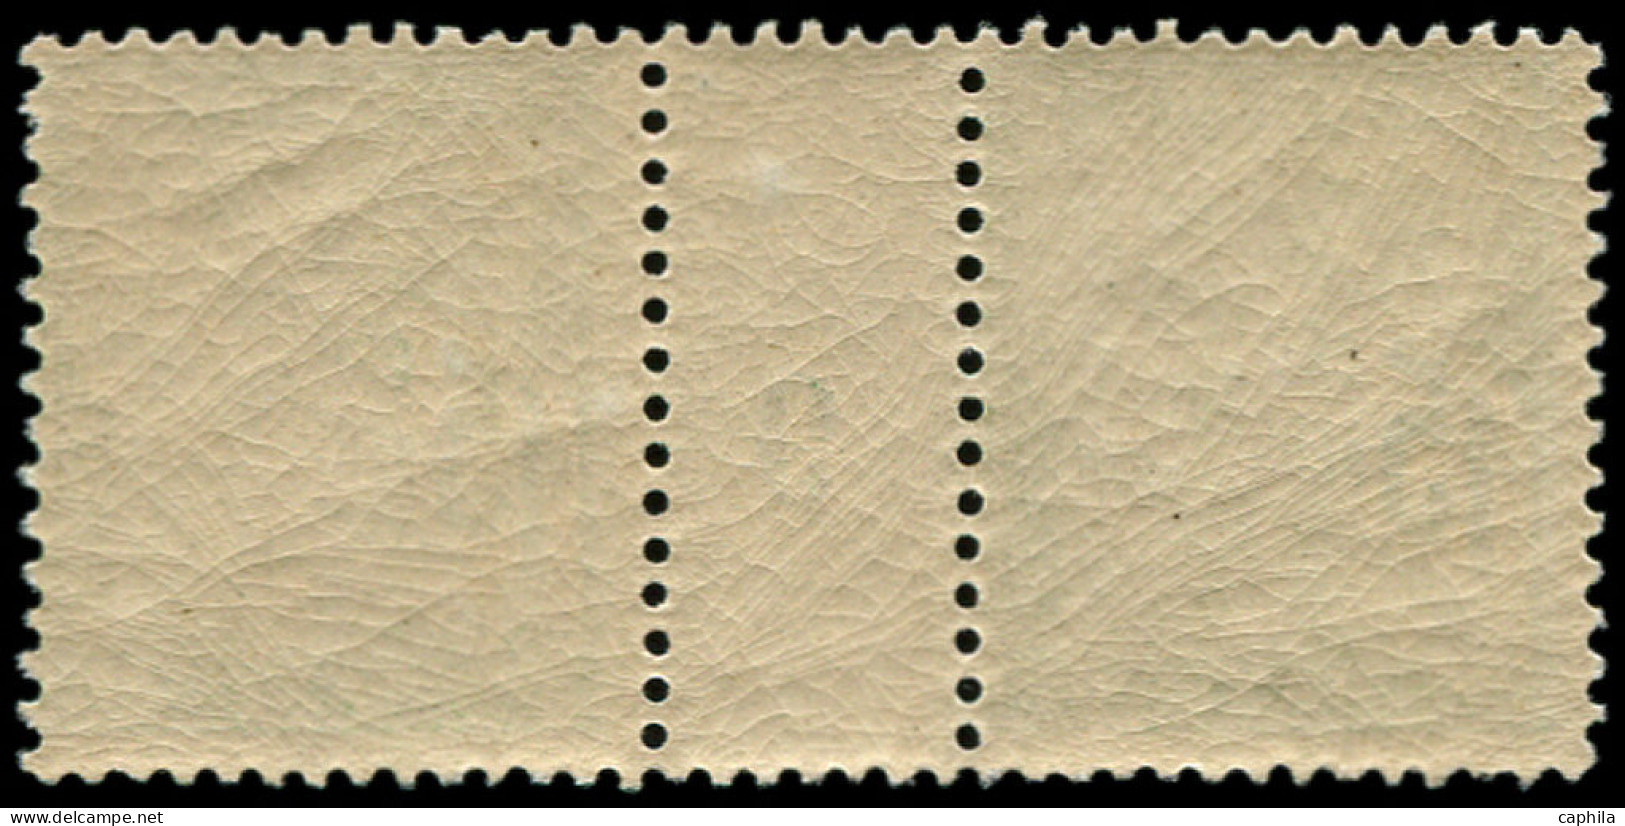 ** FRANCE - Taxe - 30, Paire Millésime "9": 15c. Vert-jaune - 1859-1959 Mint/hinged